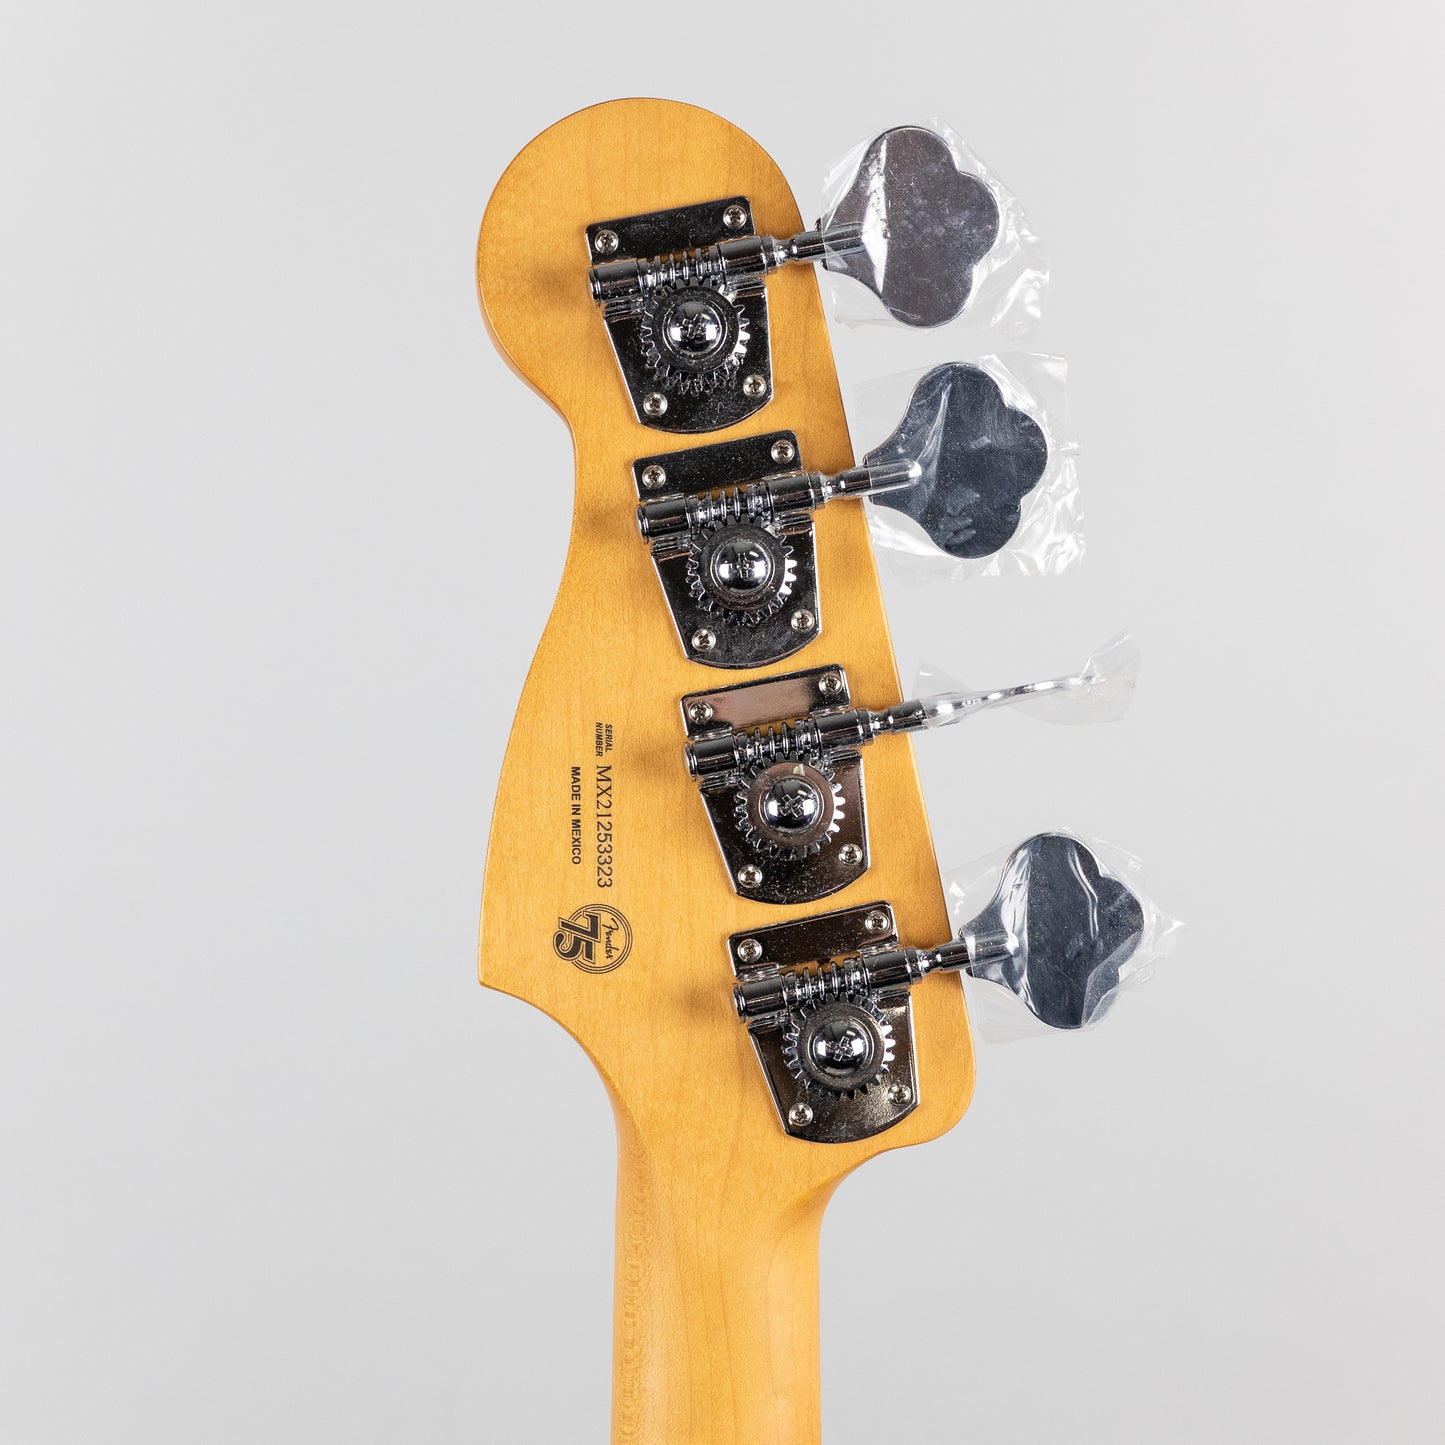 Fender Player Plus Precision Bass in Silver Smoke (MX21253323)